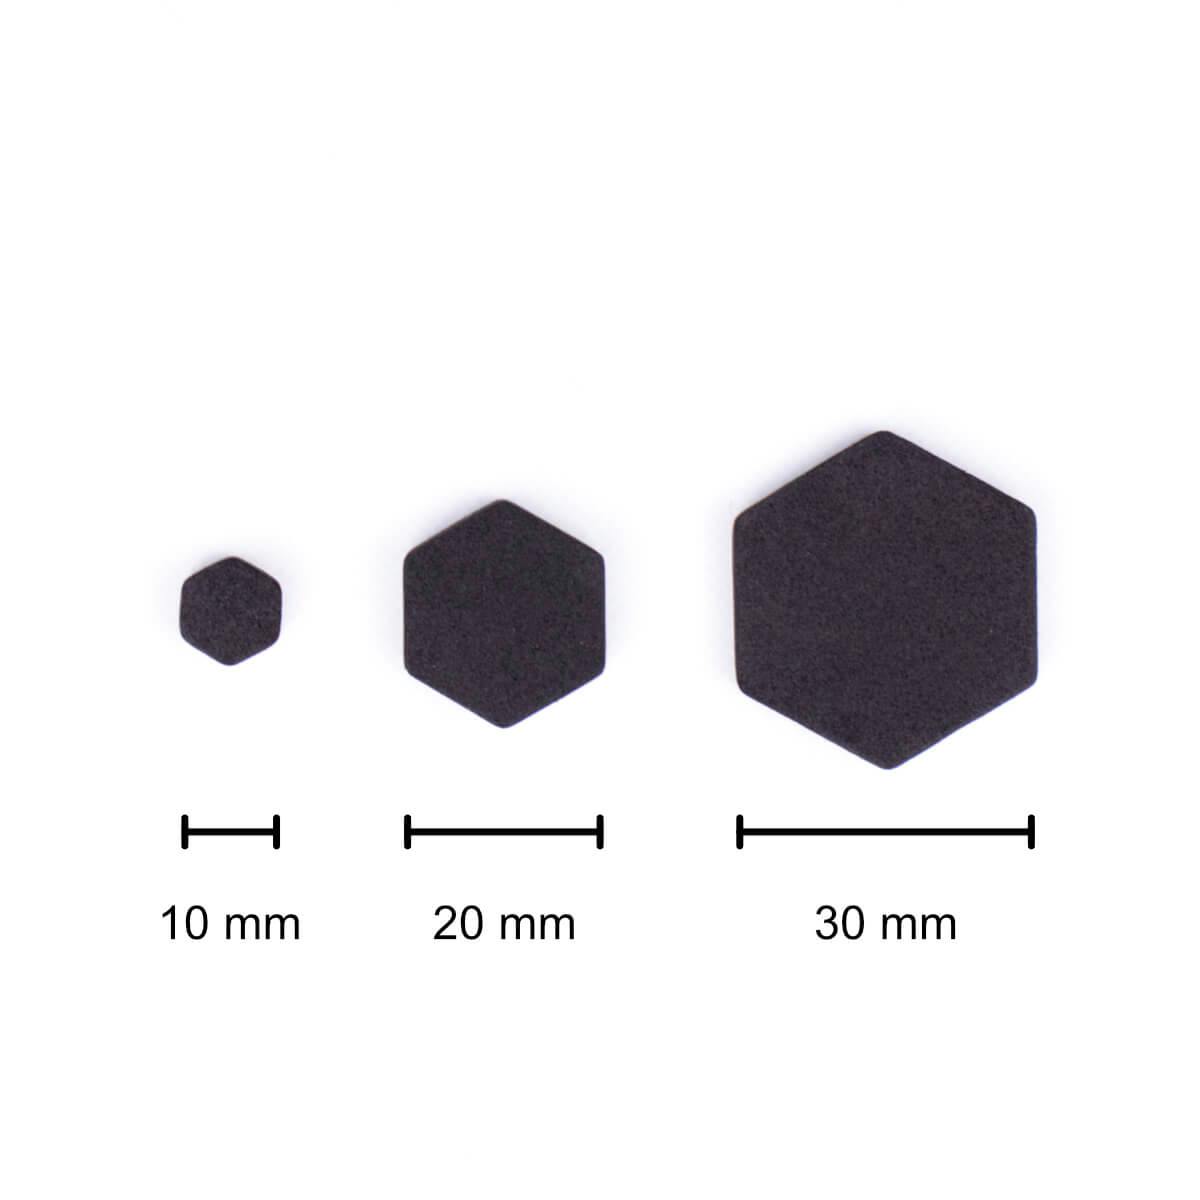 Sample sizes of foam hexagons